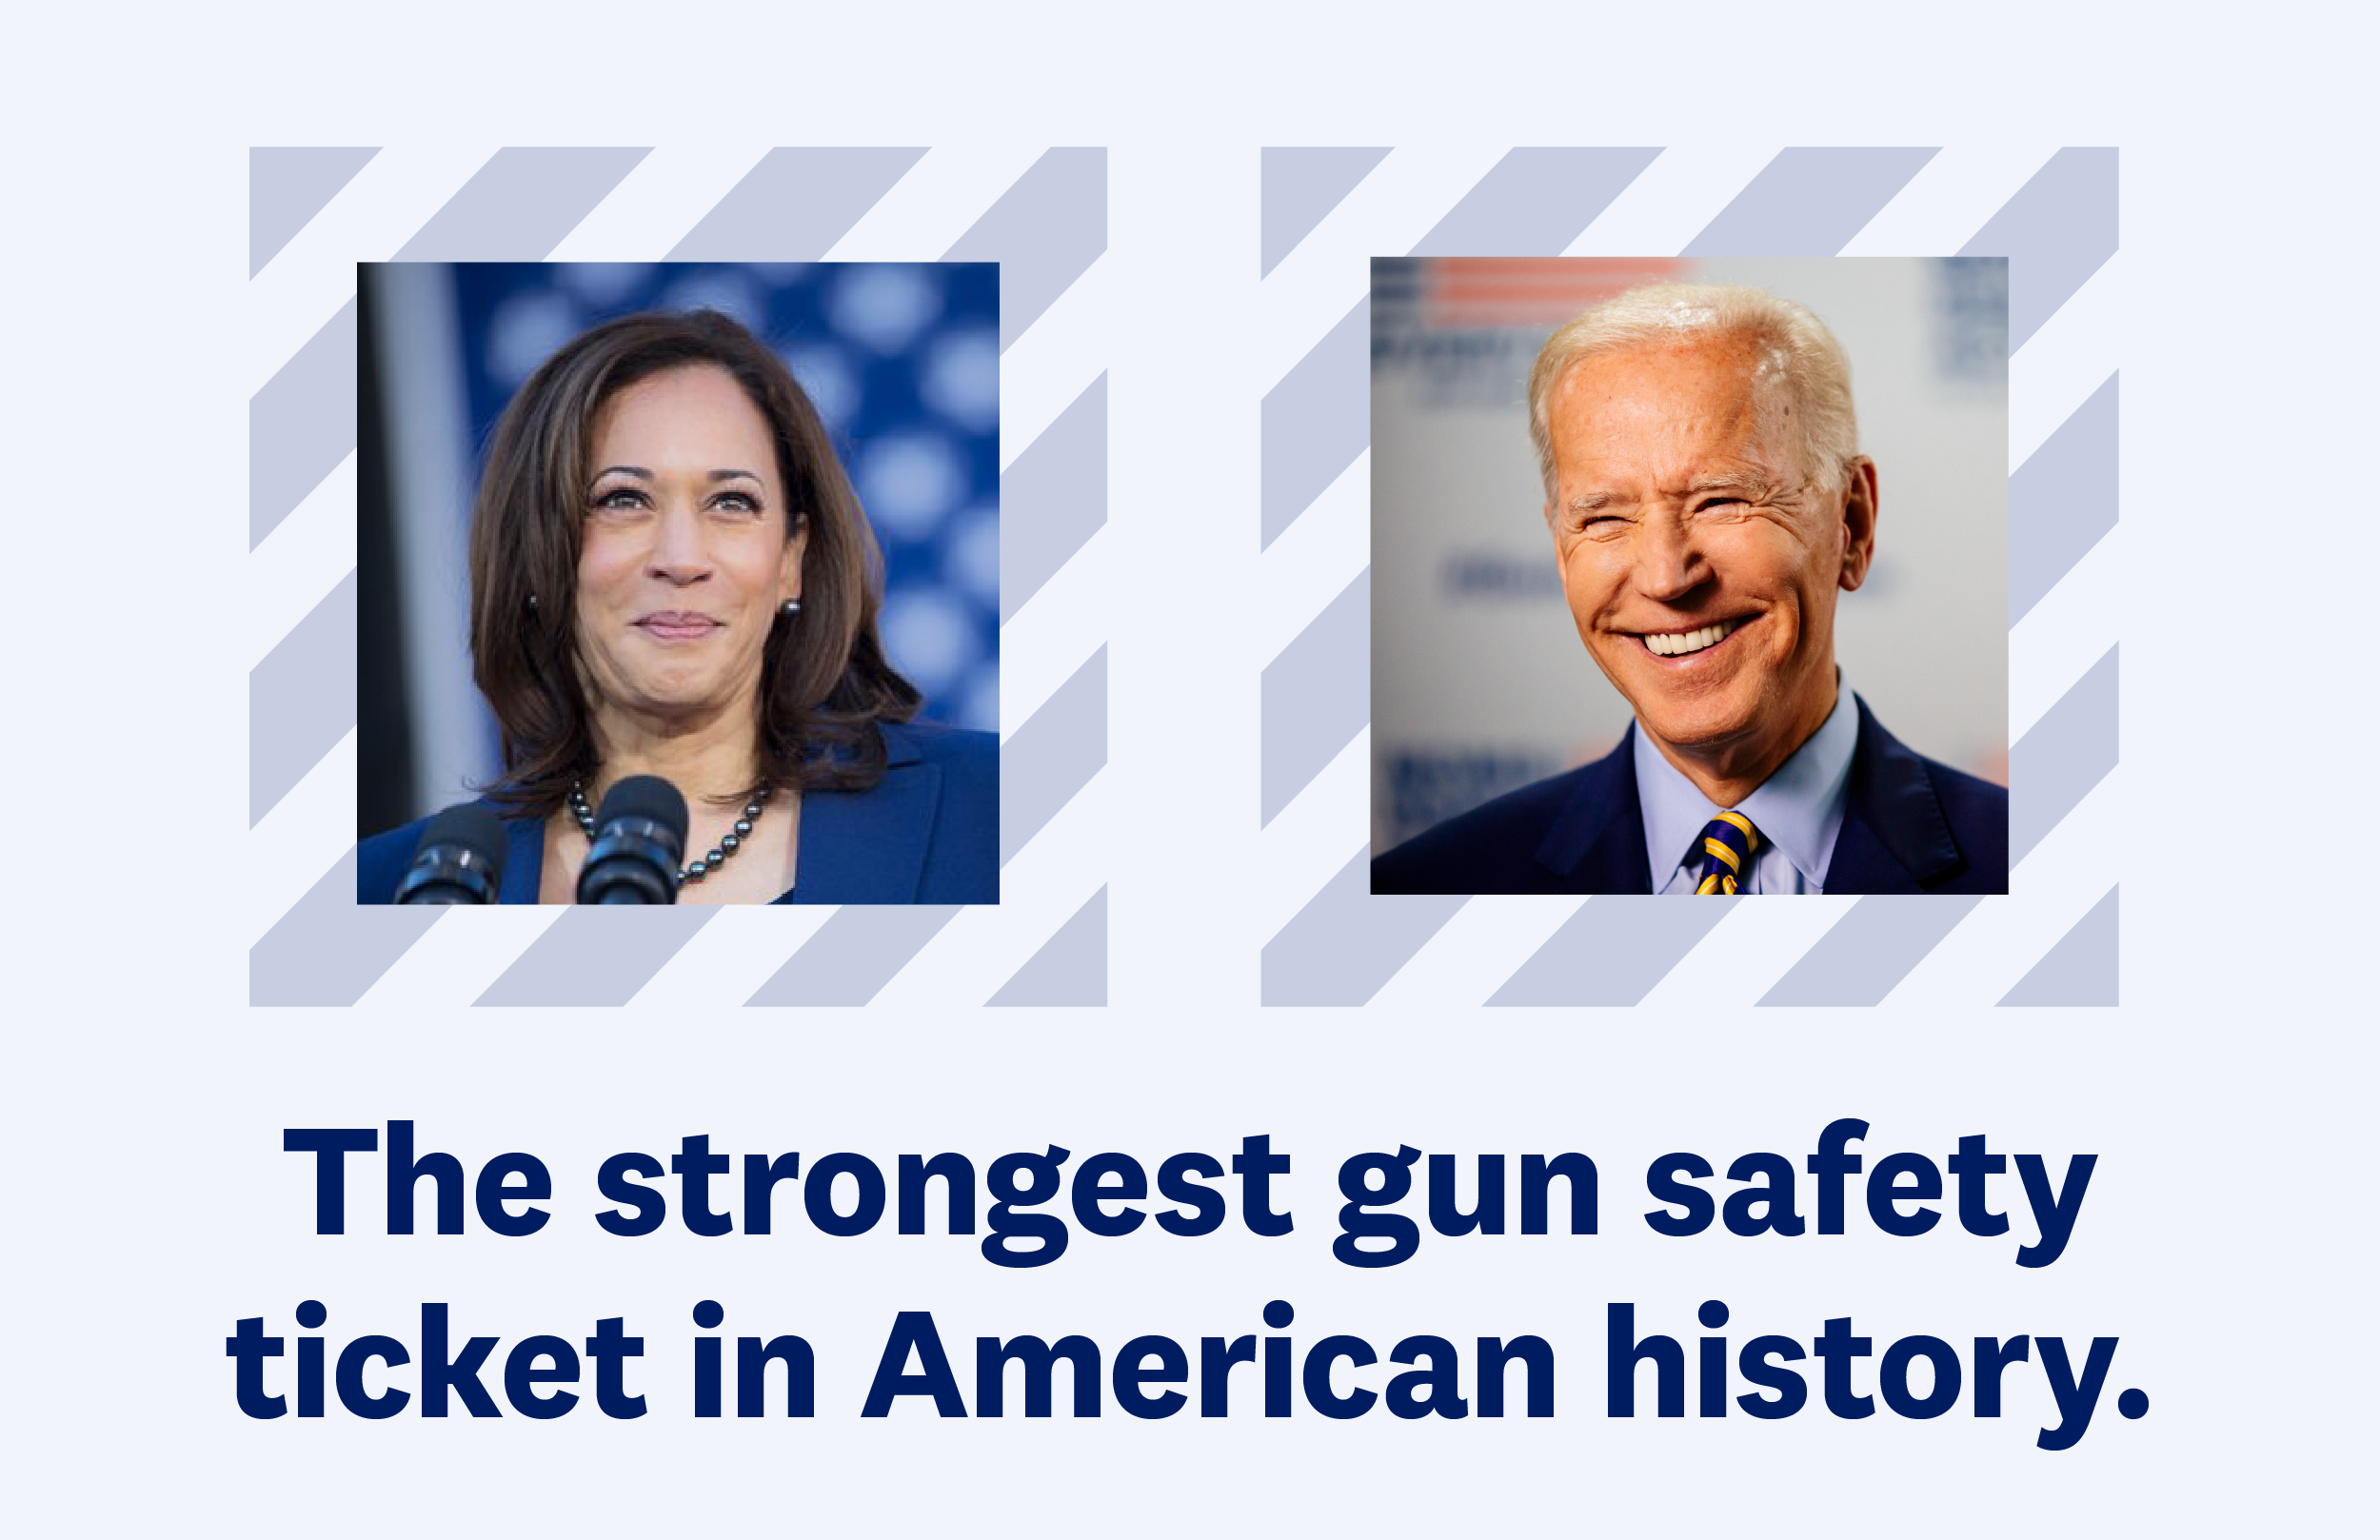 Joe Biden and Kamala Harris will be the strongest gun safety ticket in American history.